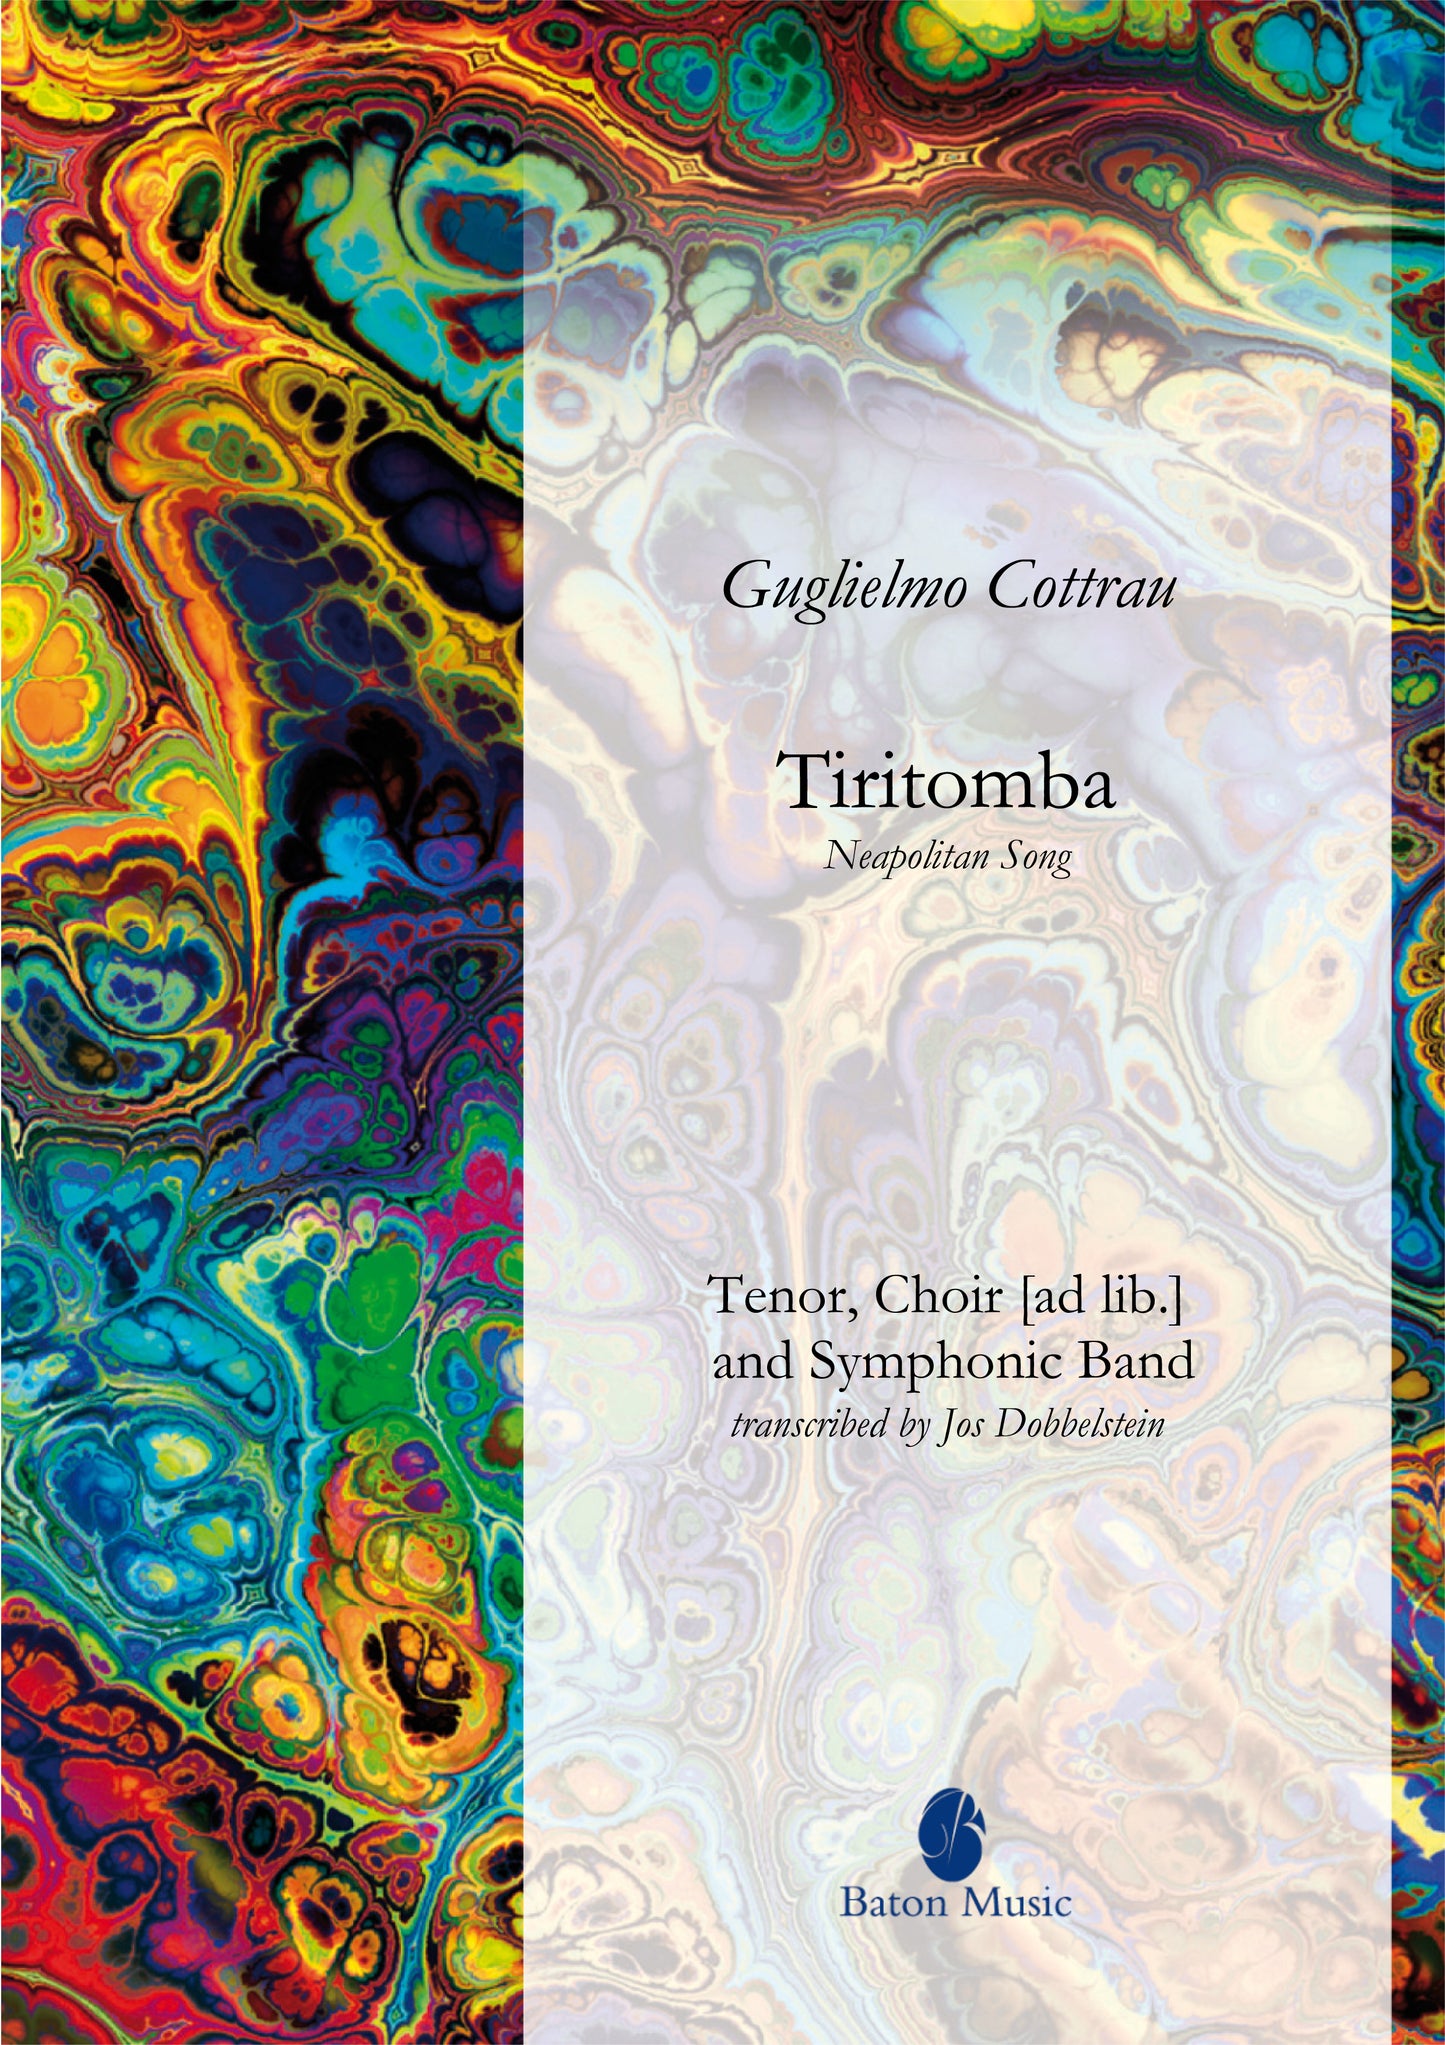 Tiritomba (Neapolitan Song) - Guglielmo Cottrau